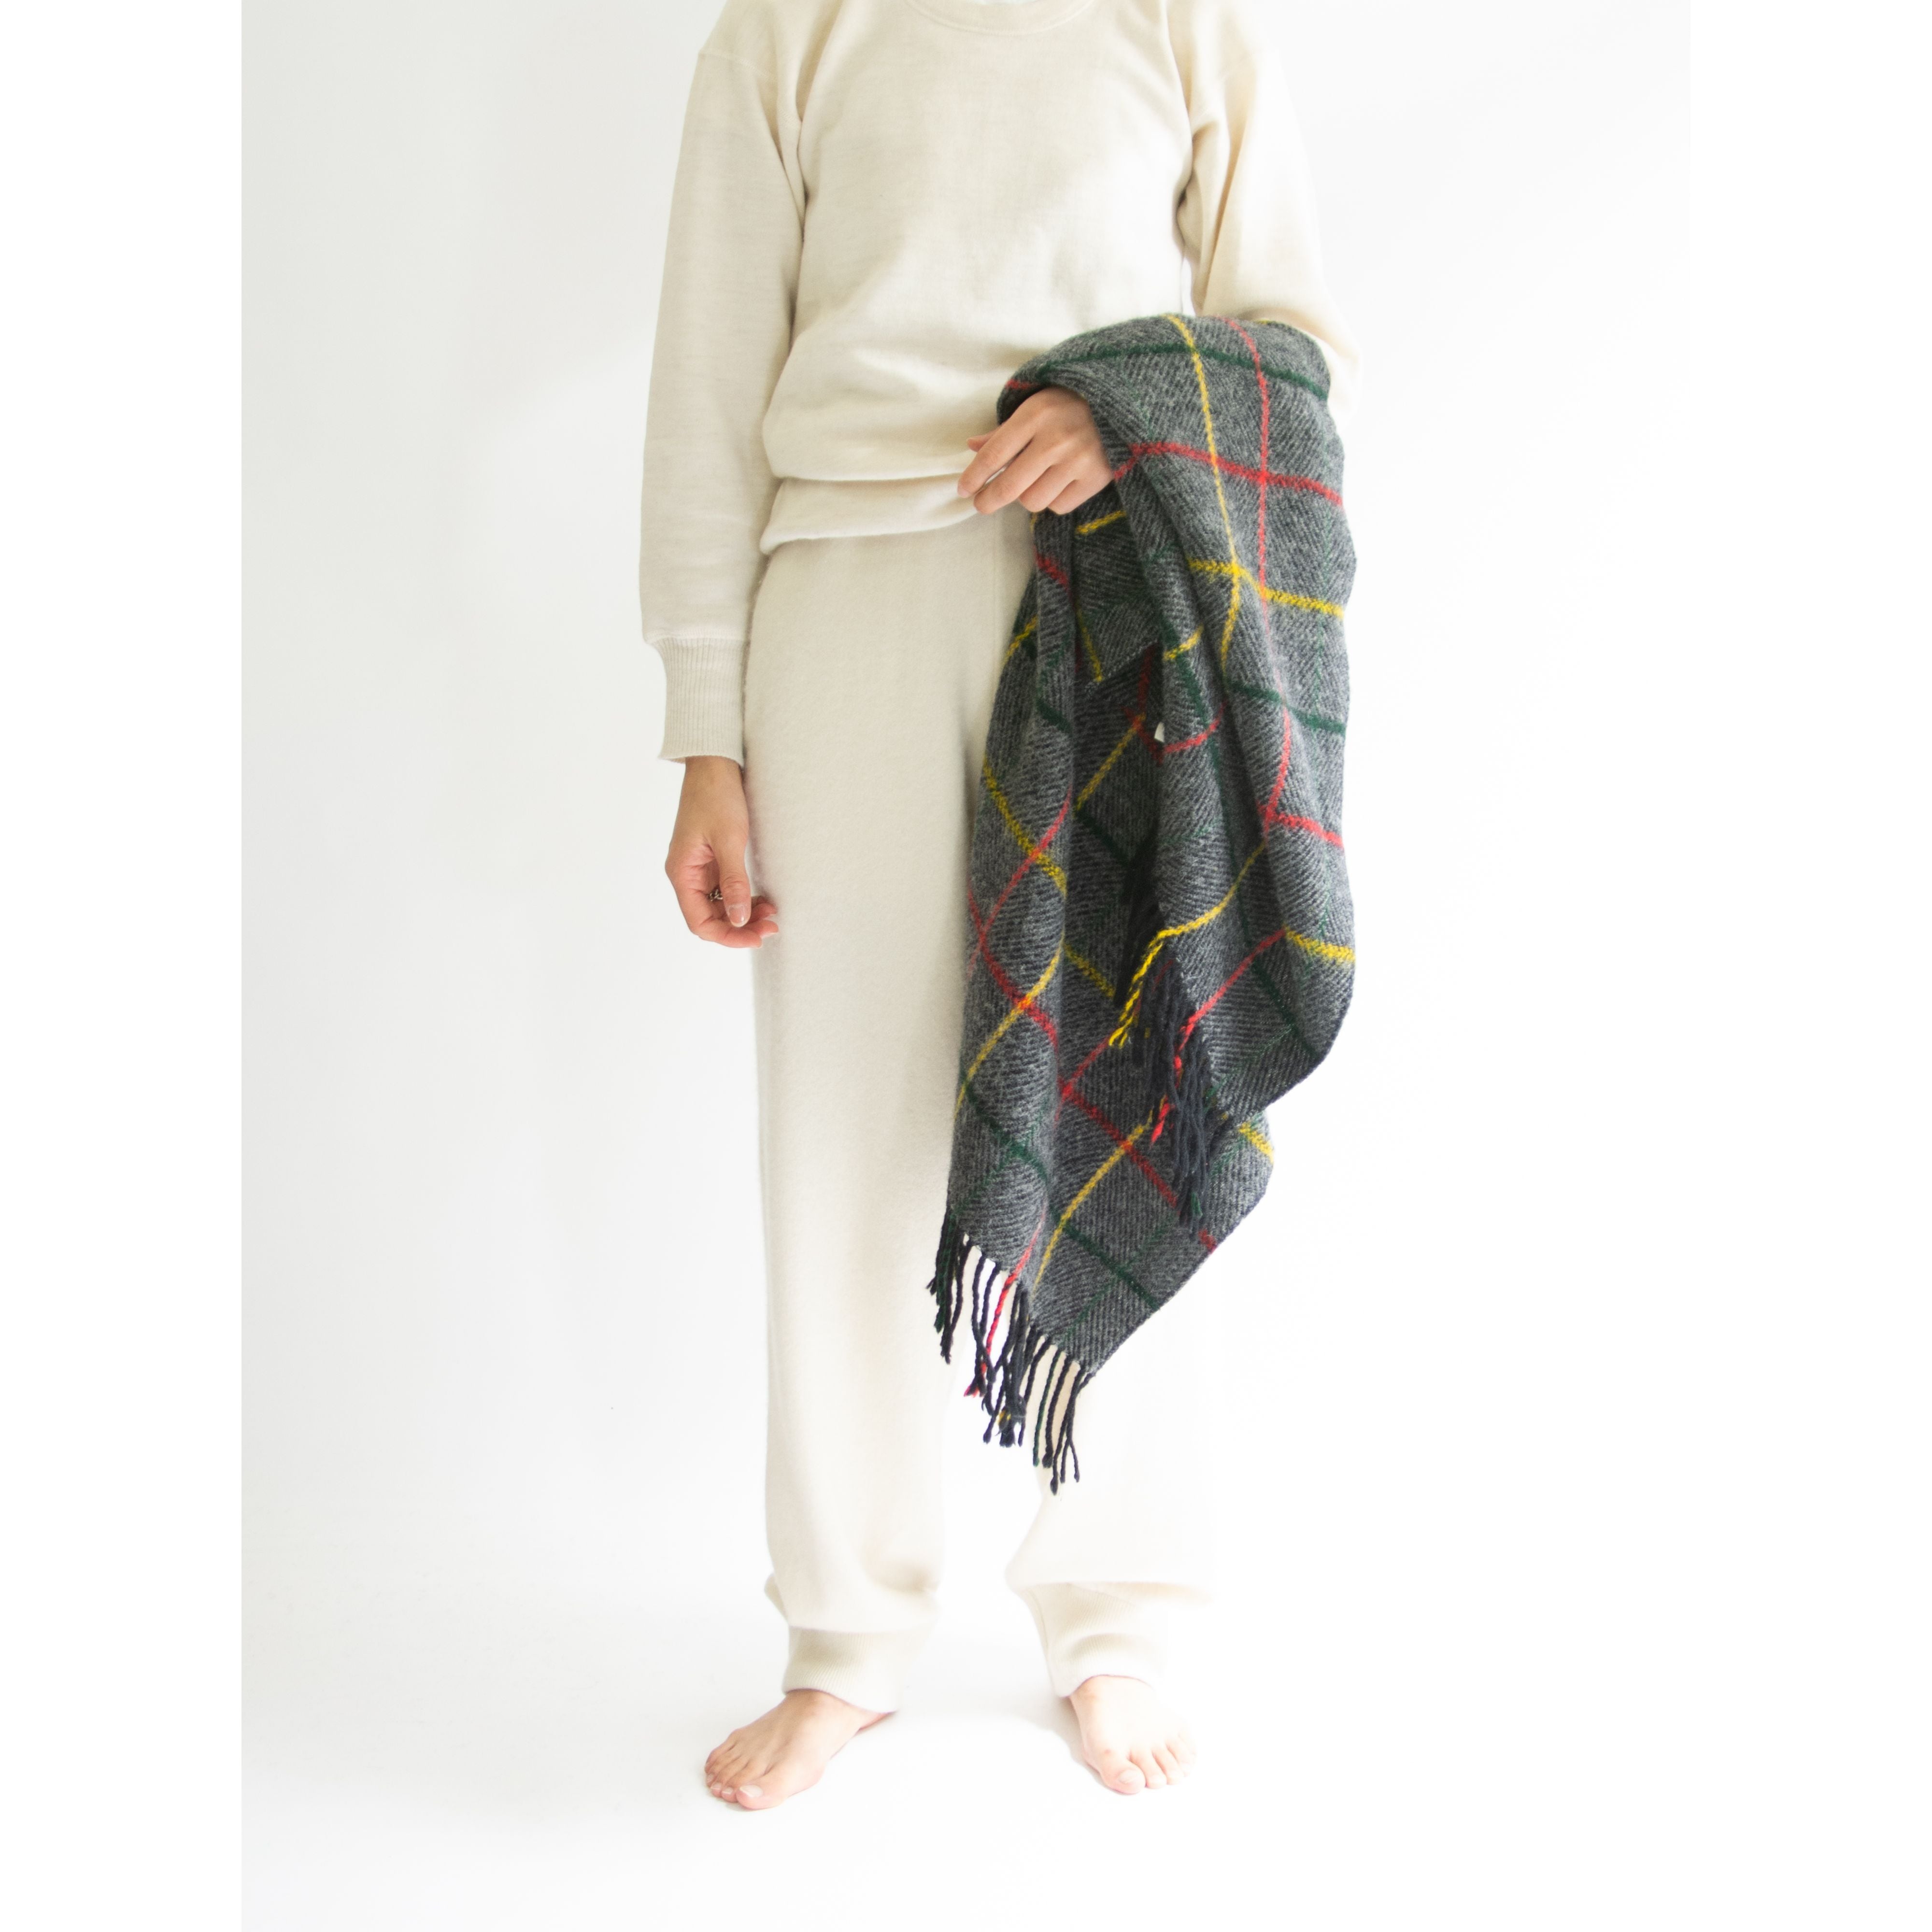 【CREAGARAN】Made in Scotland 100% Wool Check Blanket ...